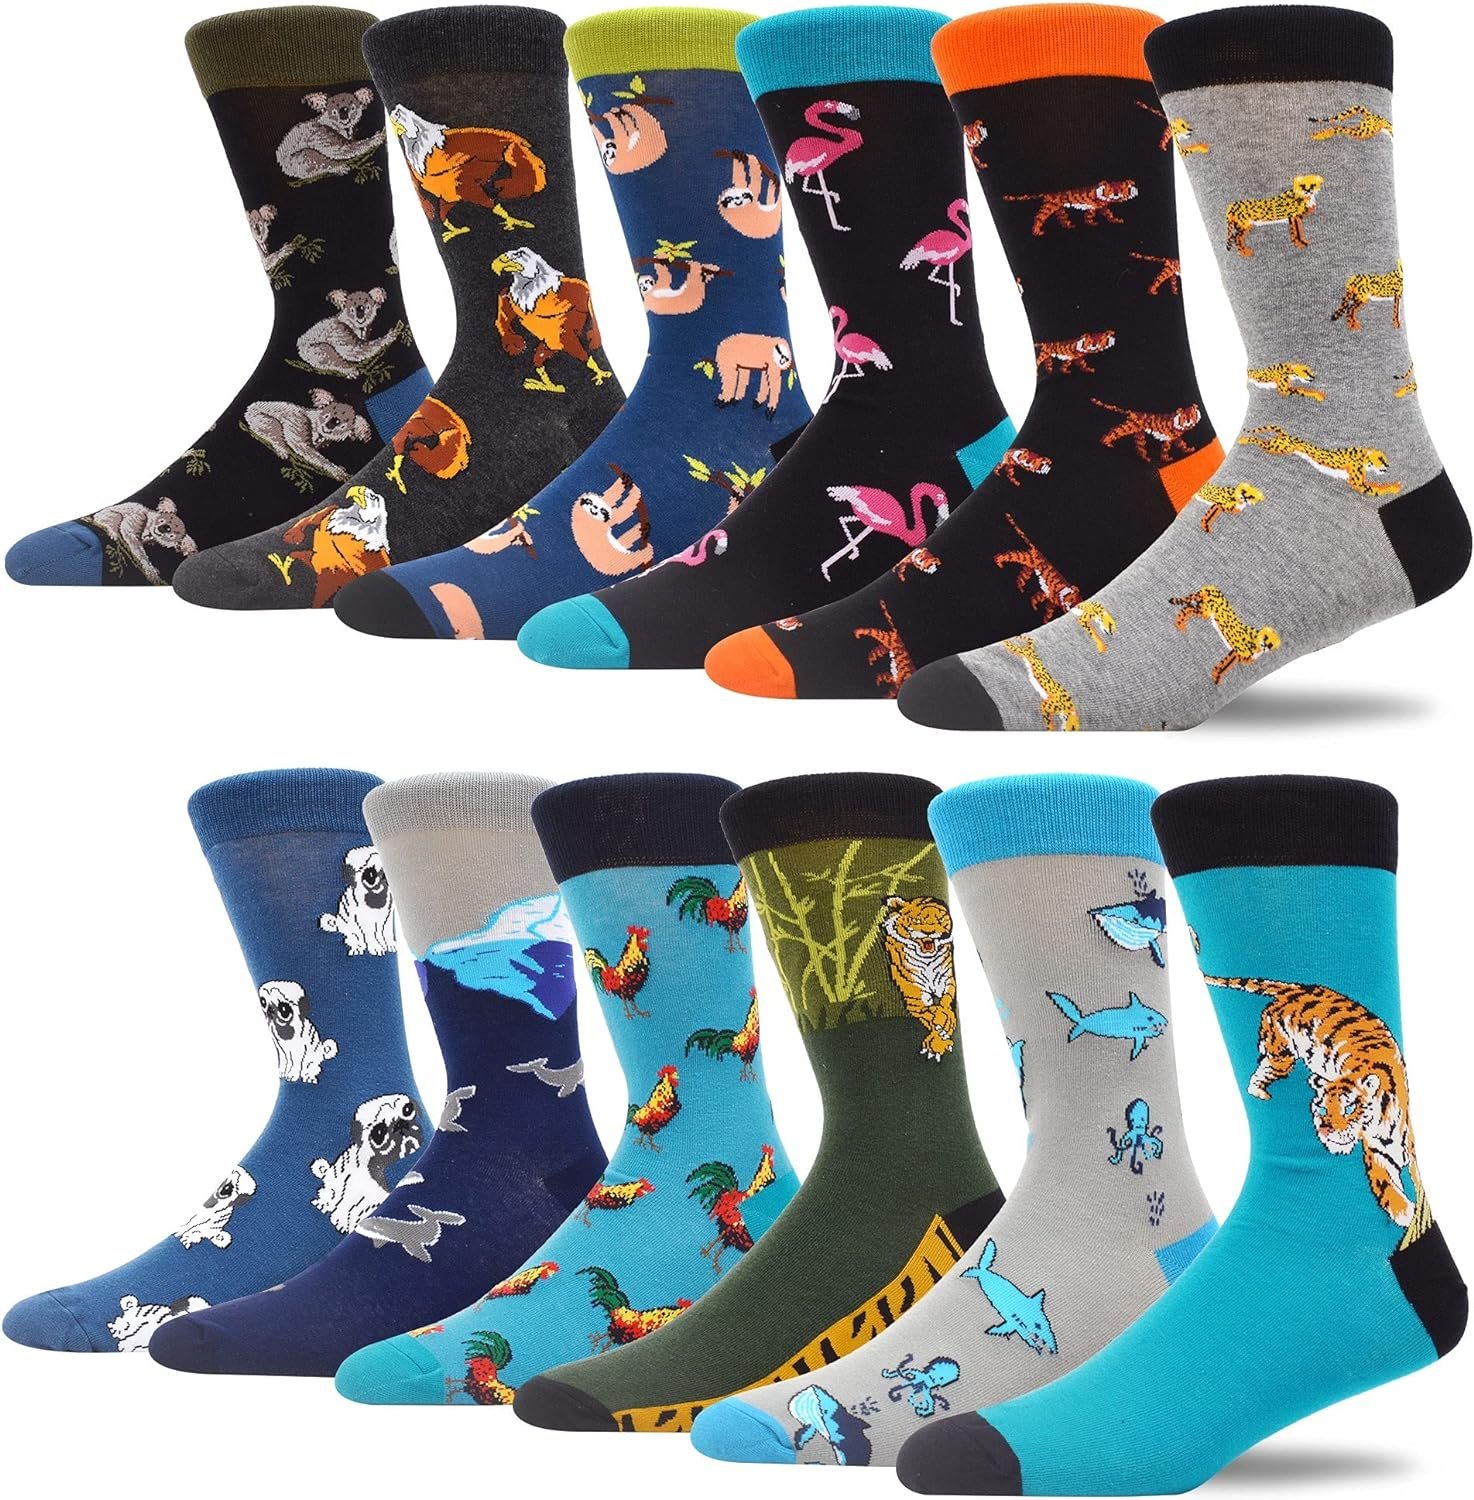 MAKABO Men’s Fun Dress Socks Packs Review